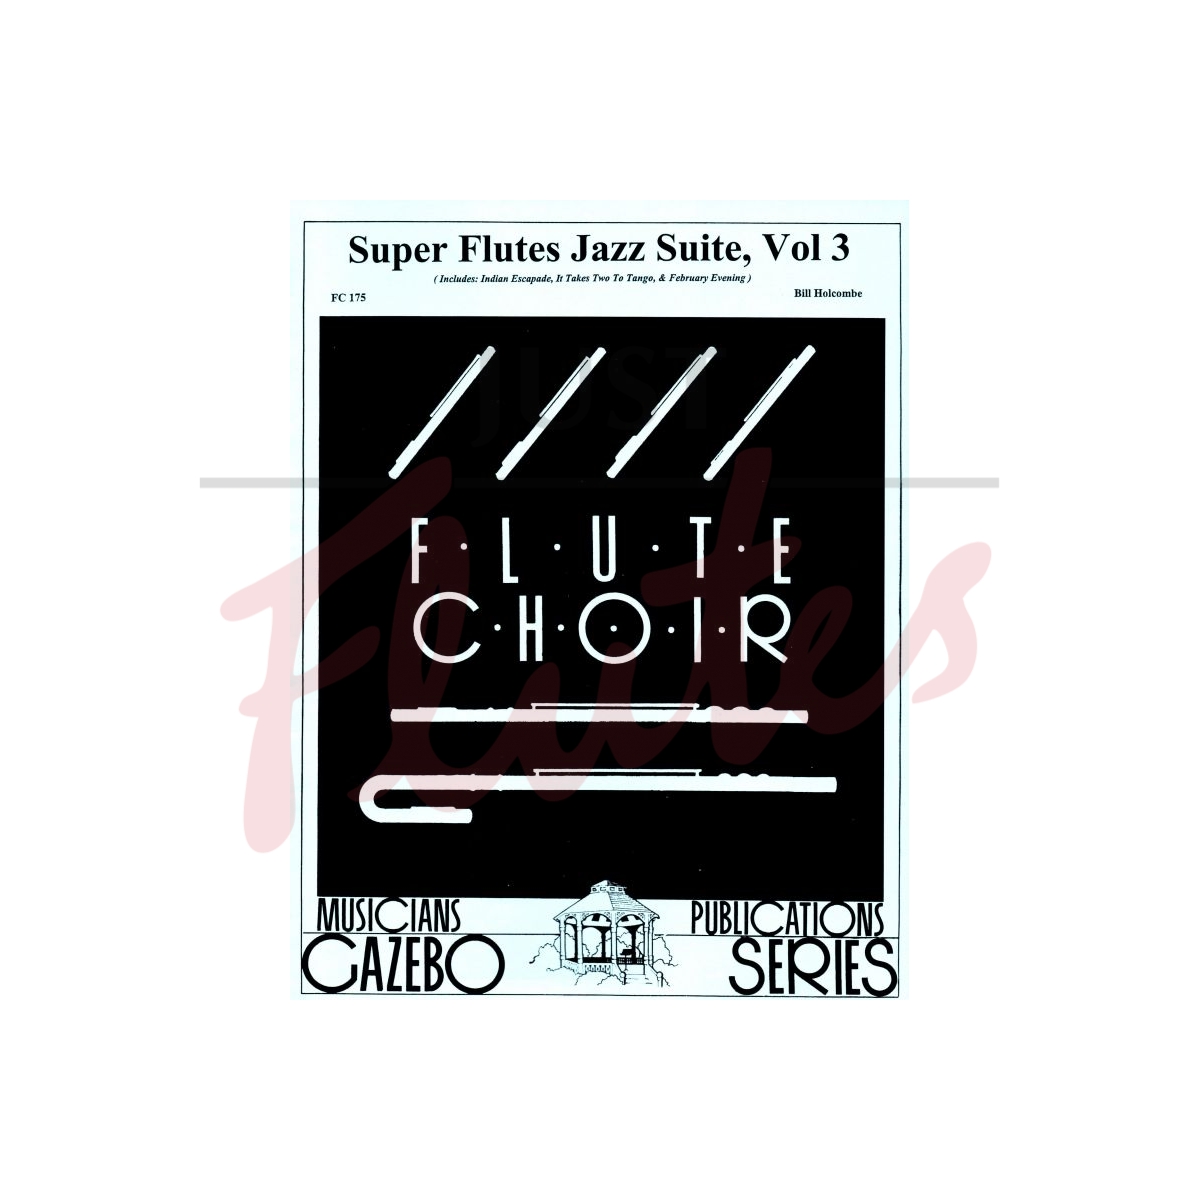 Super Flutes Jazz Suite, Vol 3